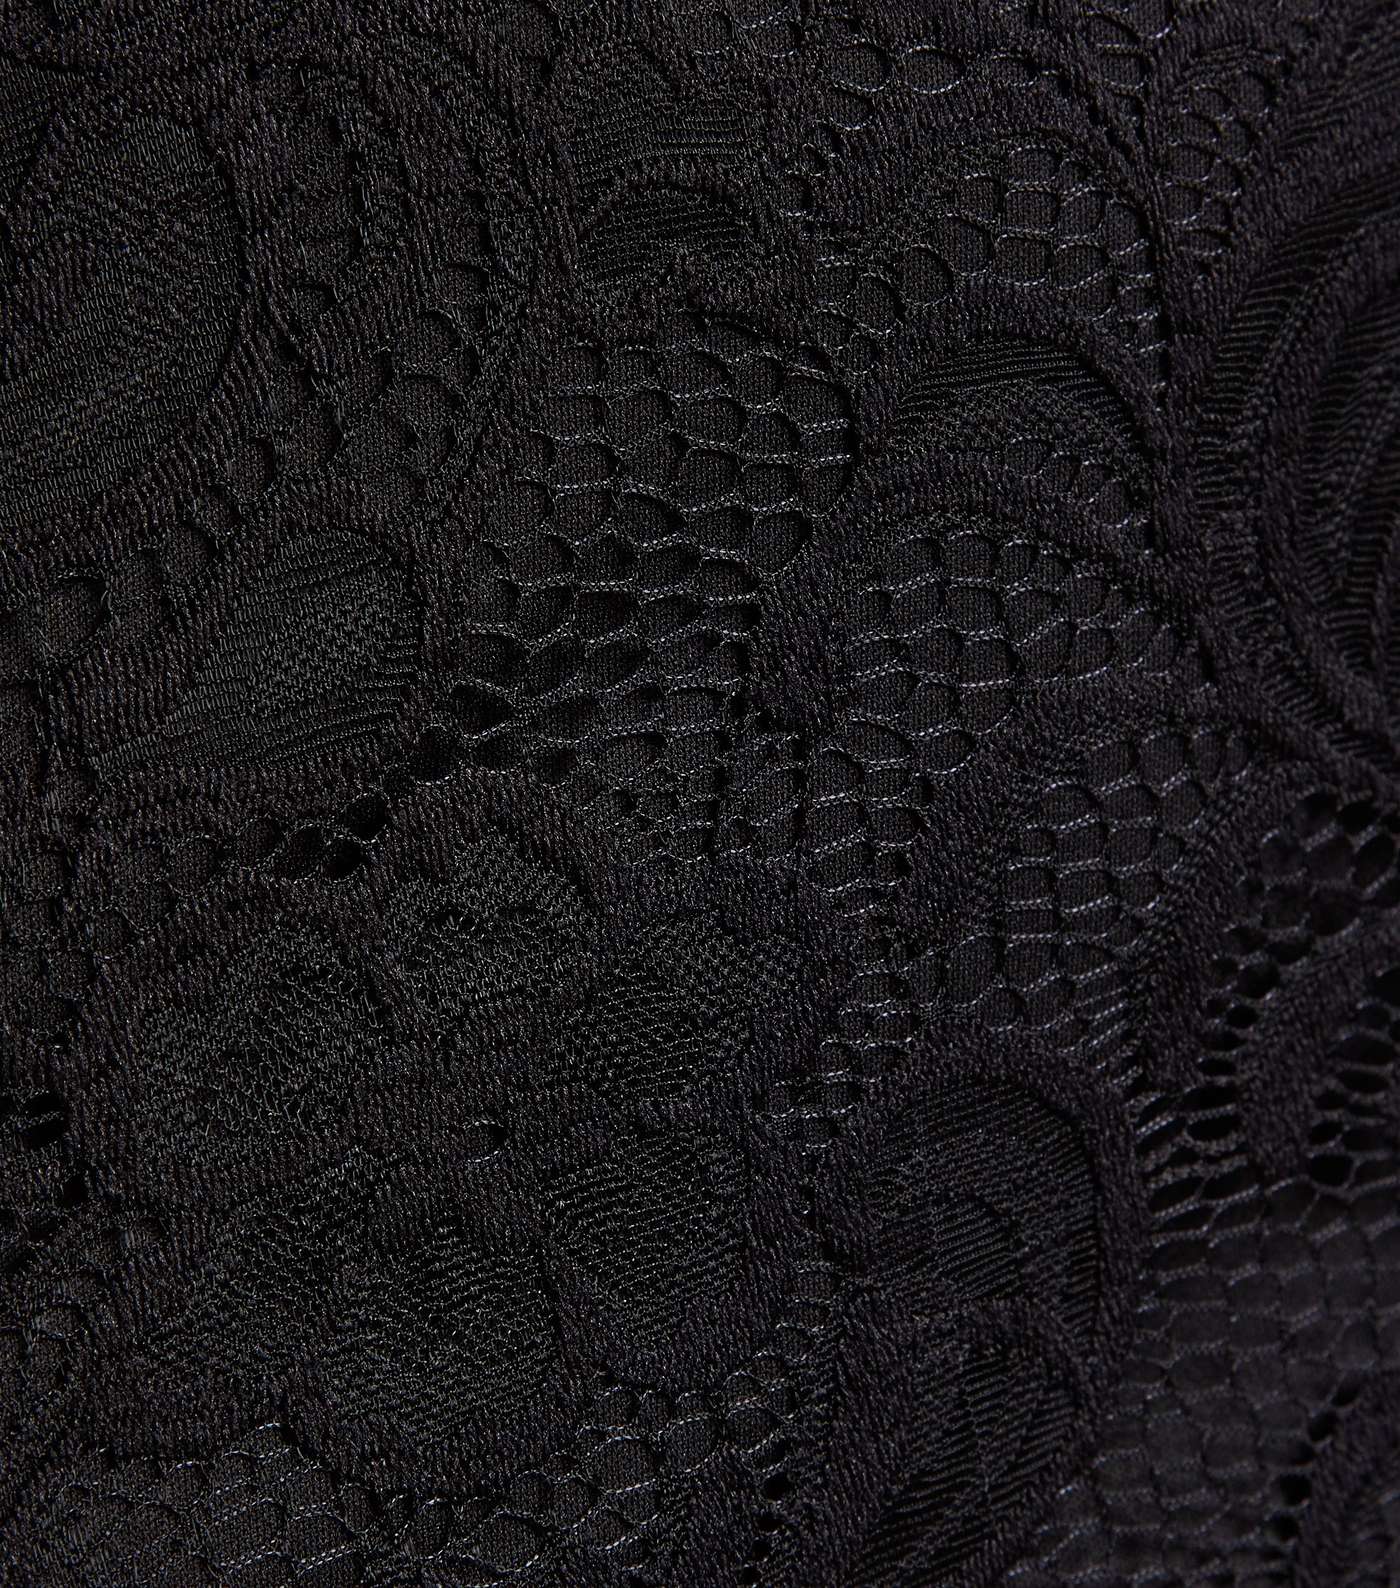 Mela Black Lace Overlay Dip Hem Dress Image 5